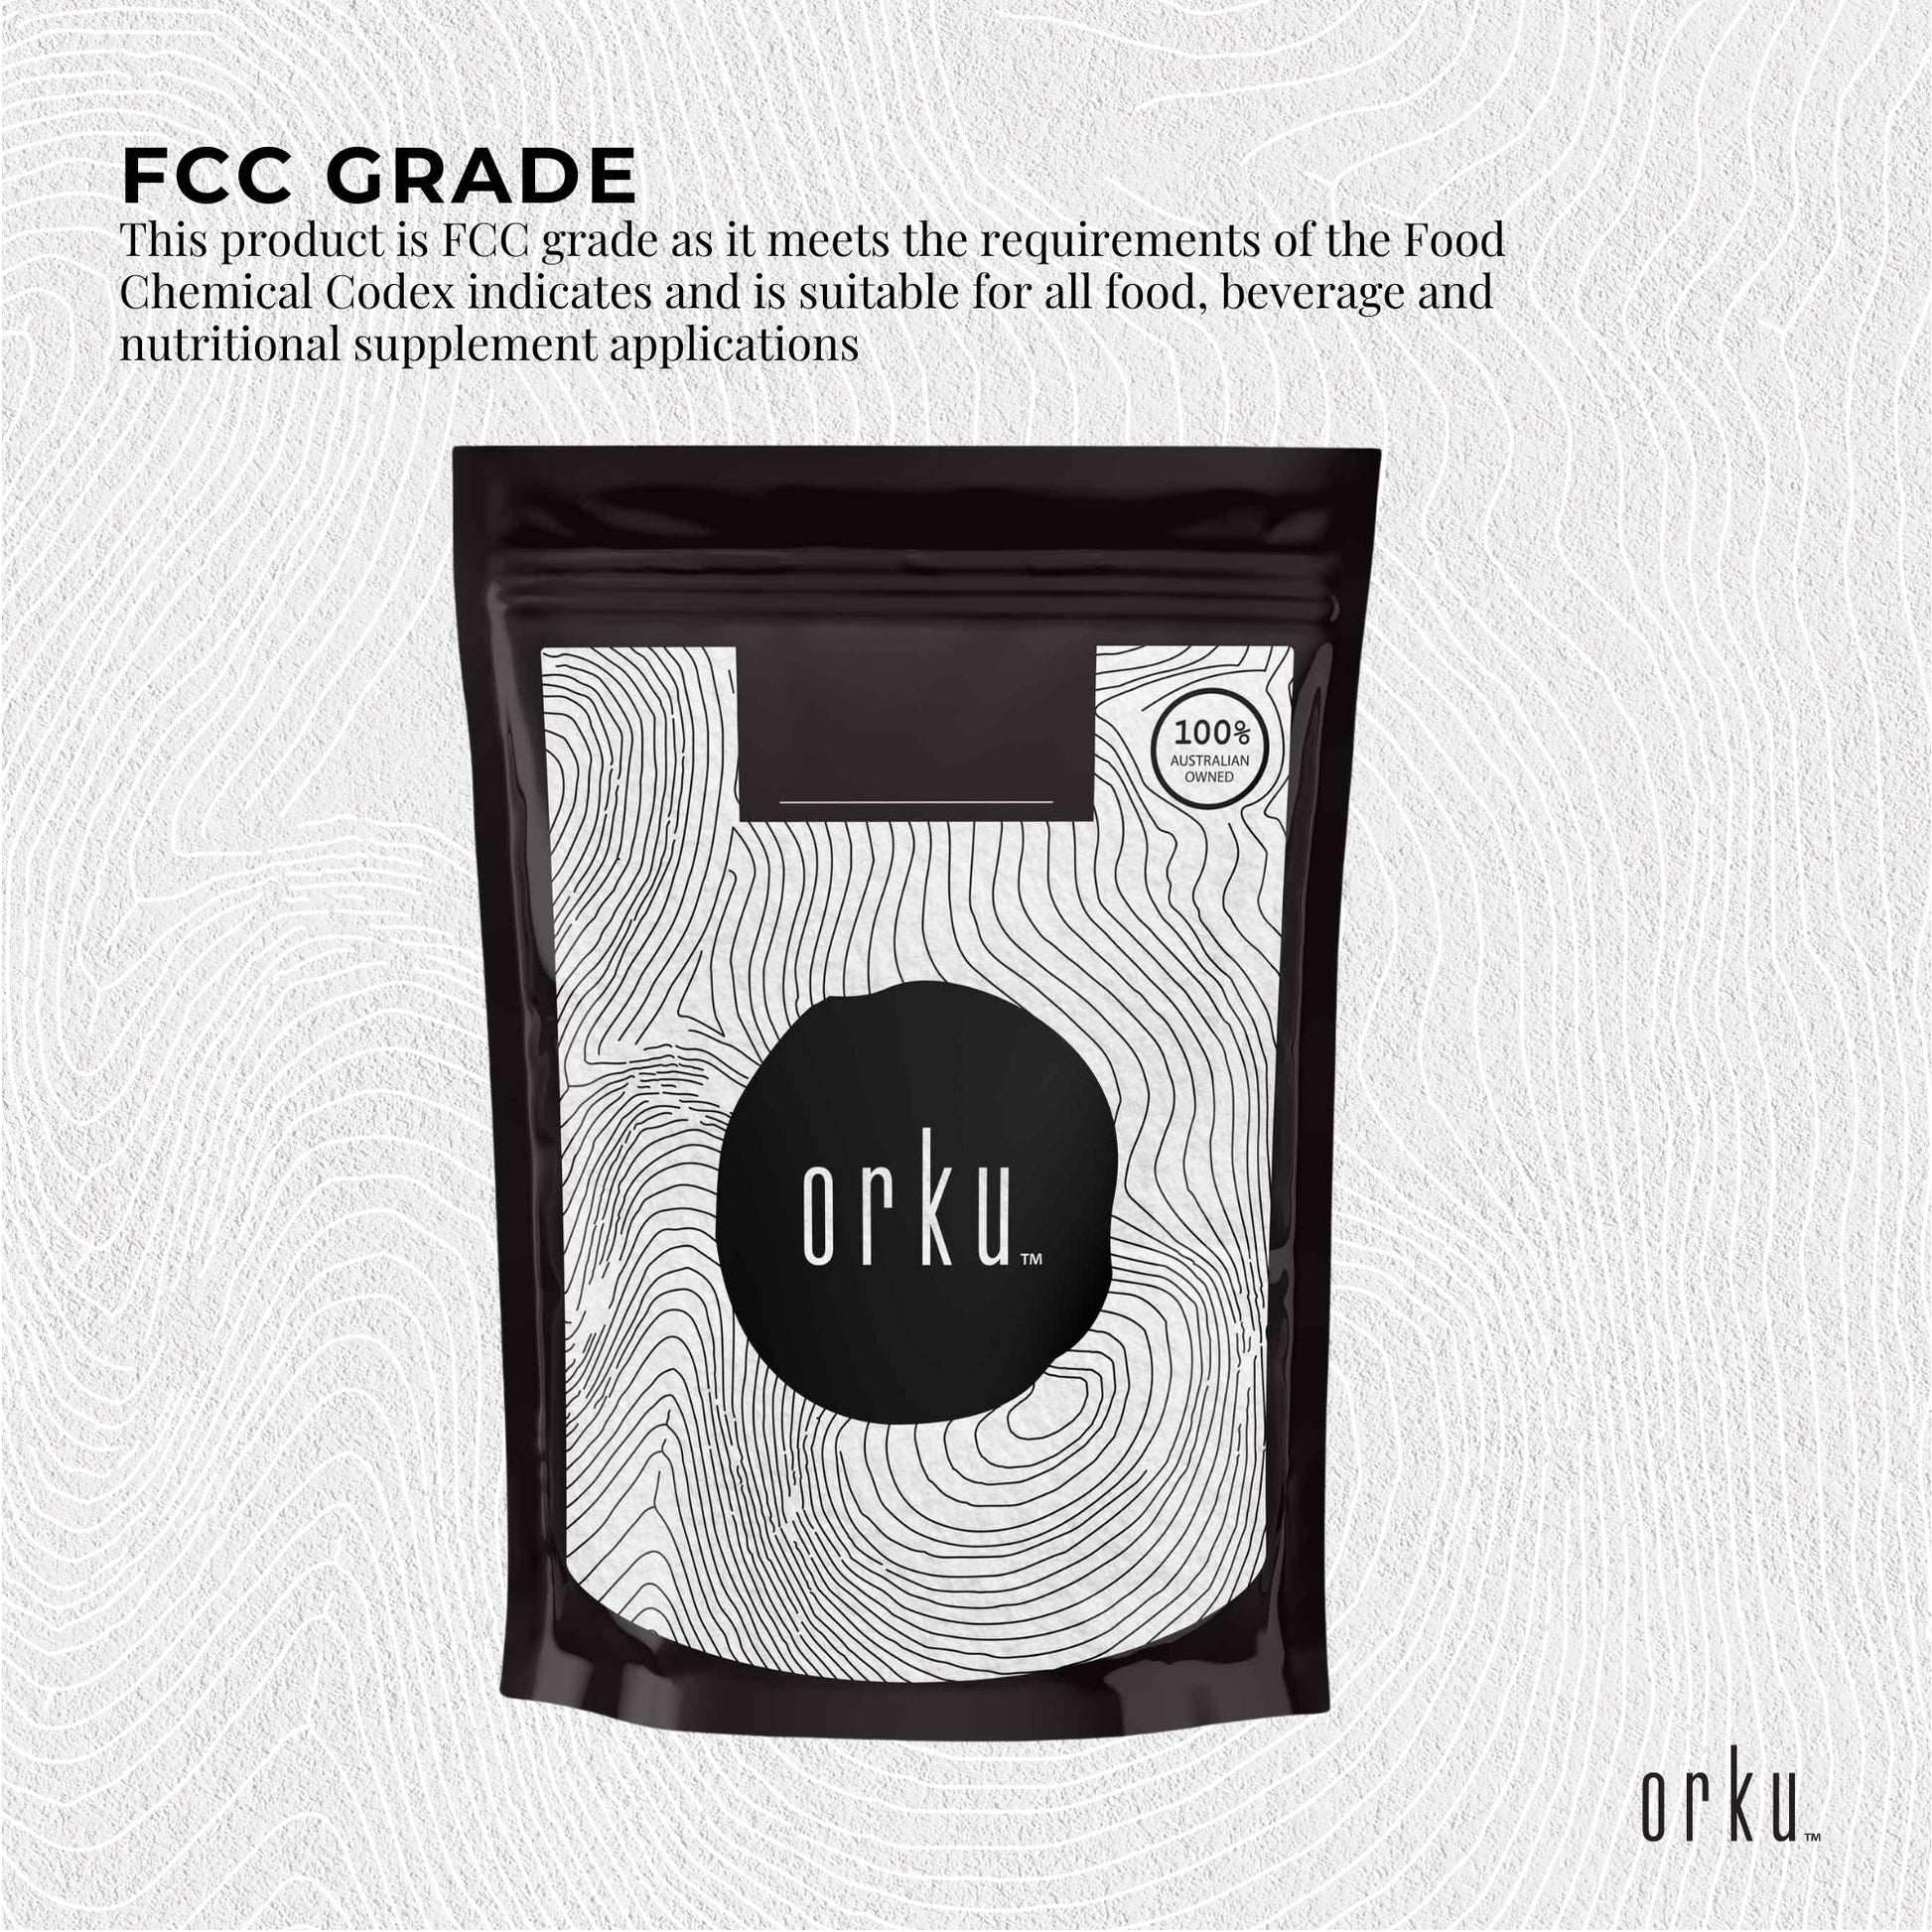 400g Organic Potassium Bicarbonate Powder - Food Grade Pure FCC Brewing Baking